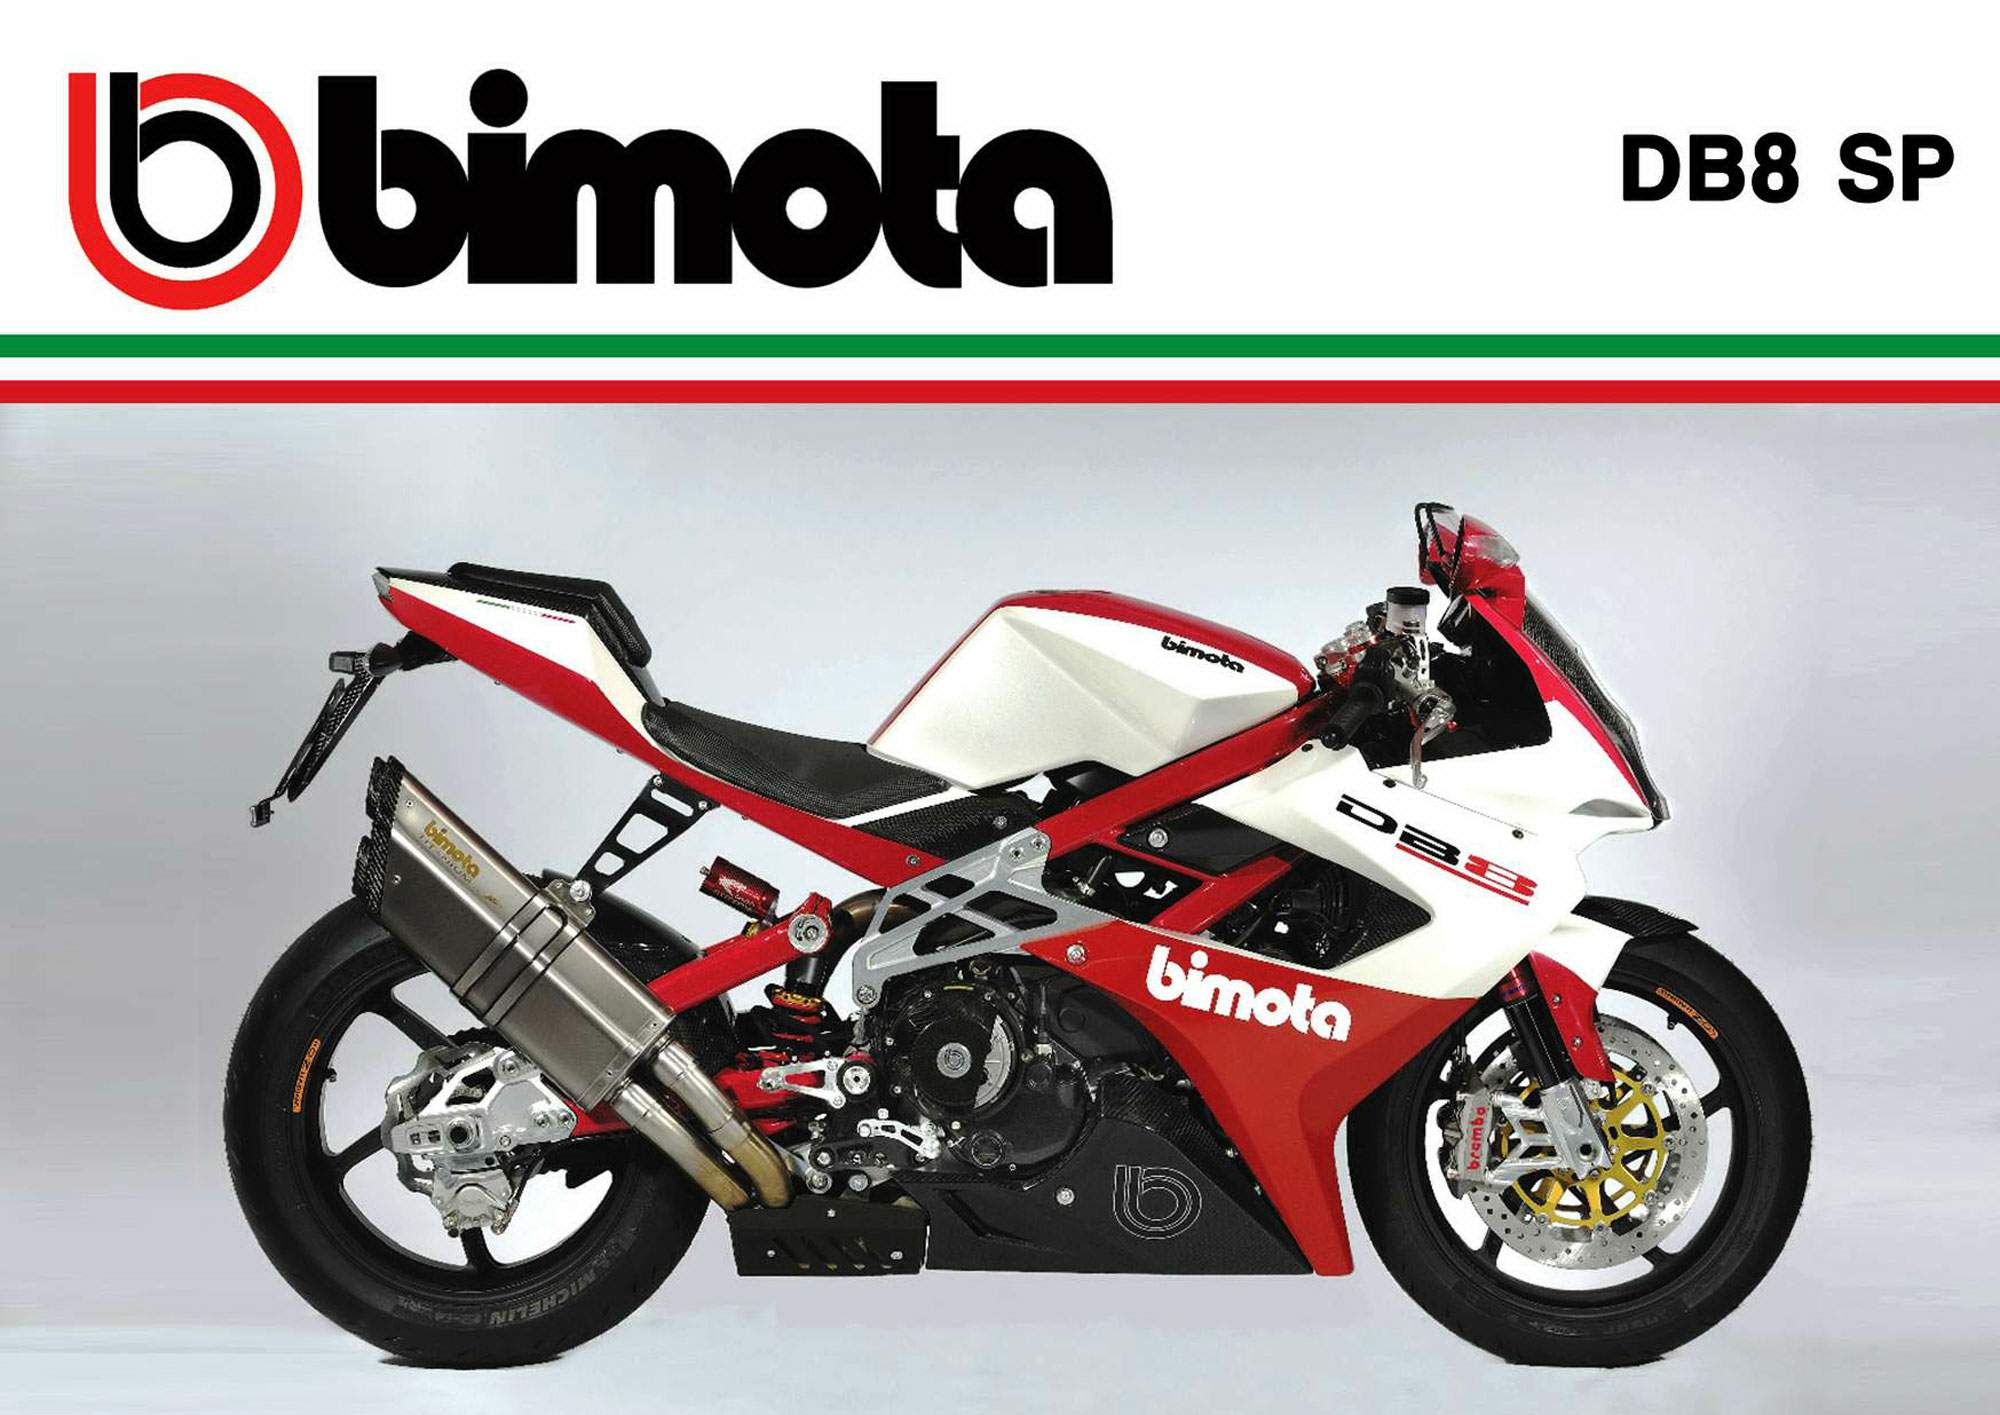 Bimota DB8 SP technical specifications